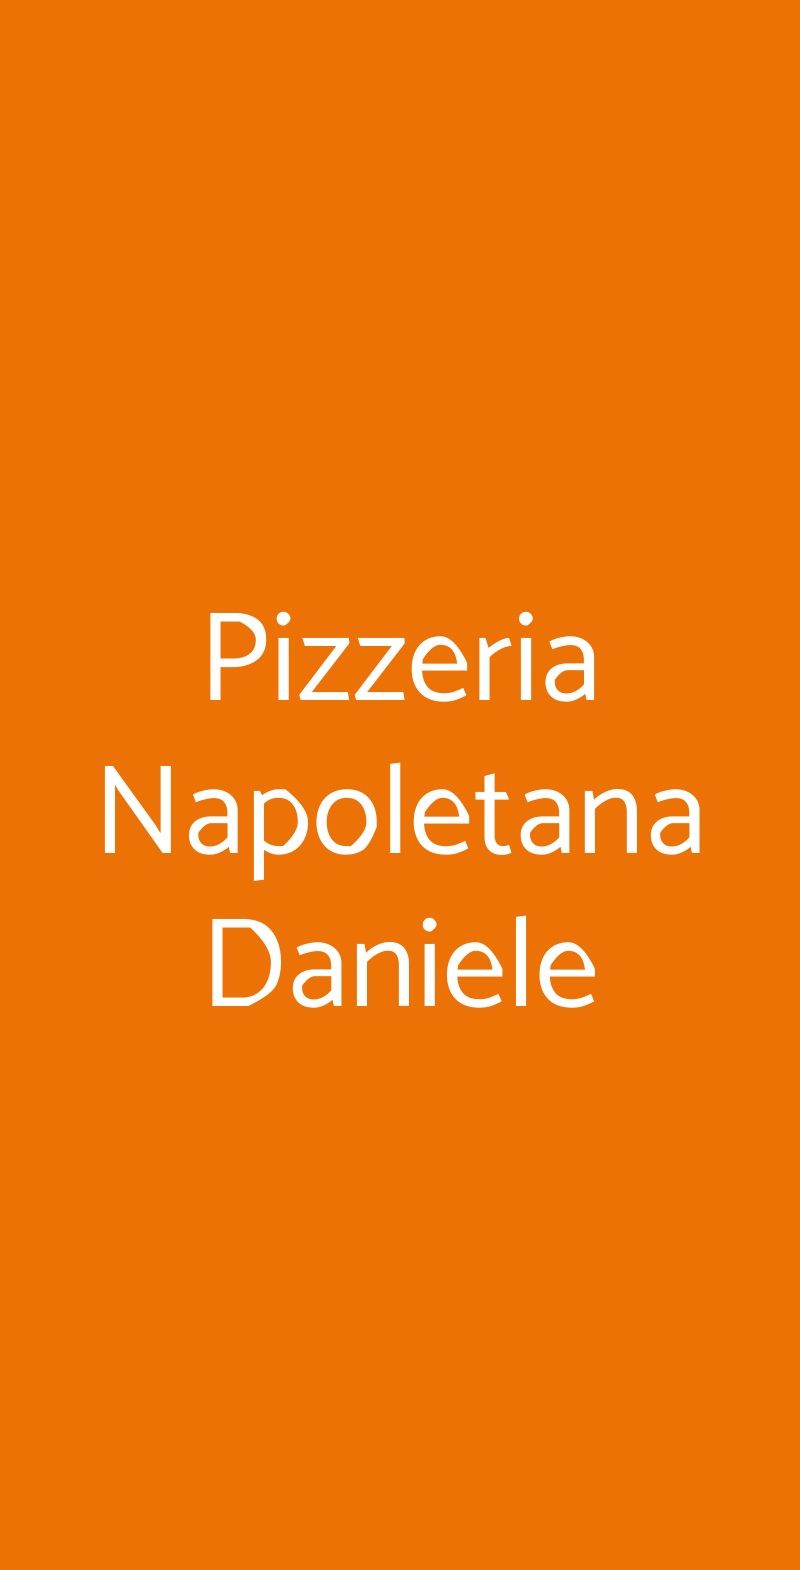 Pizzeria Napoletana Daniele Milano menù 1 pagina